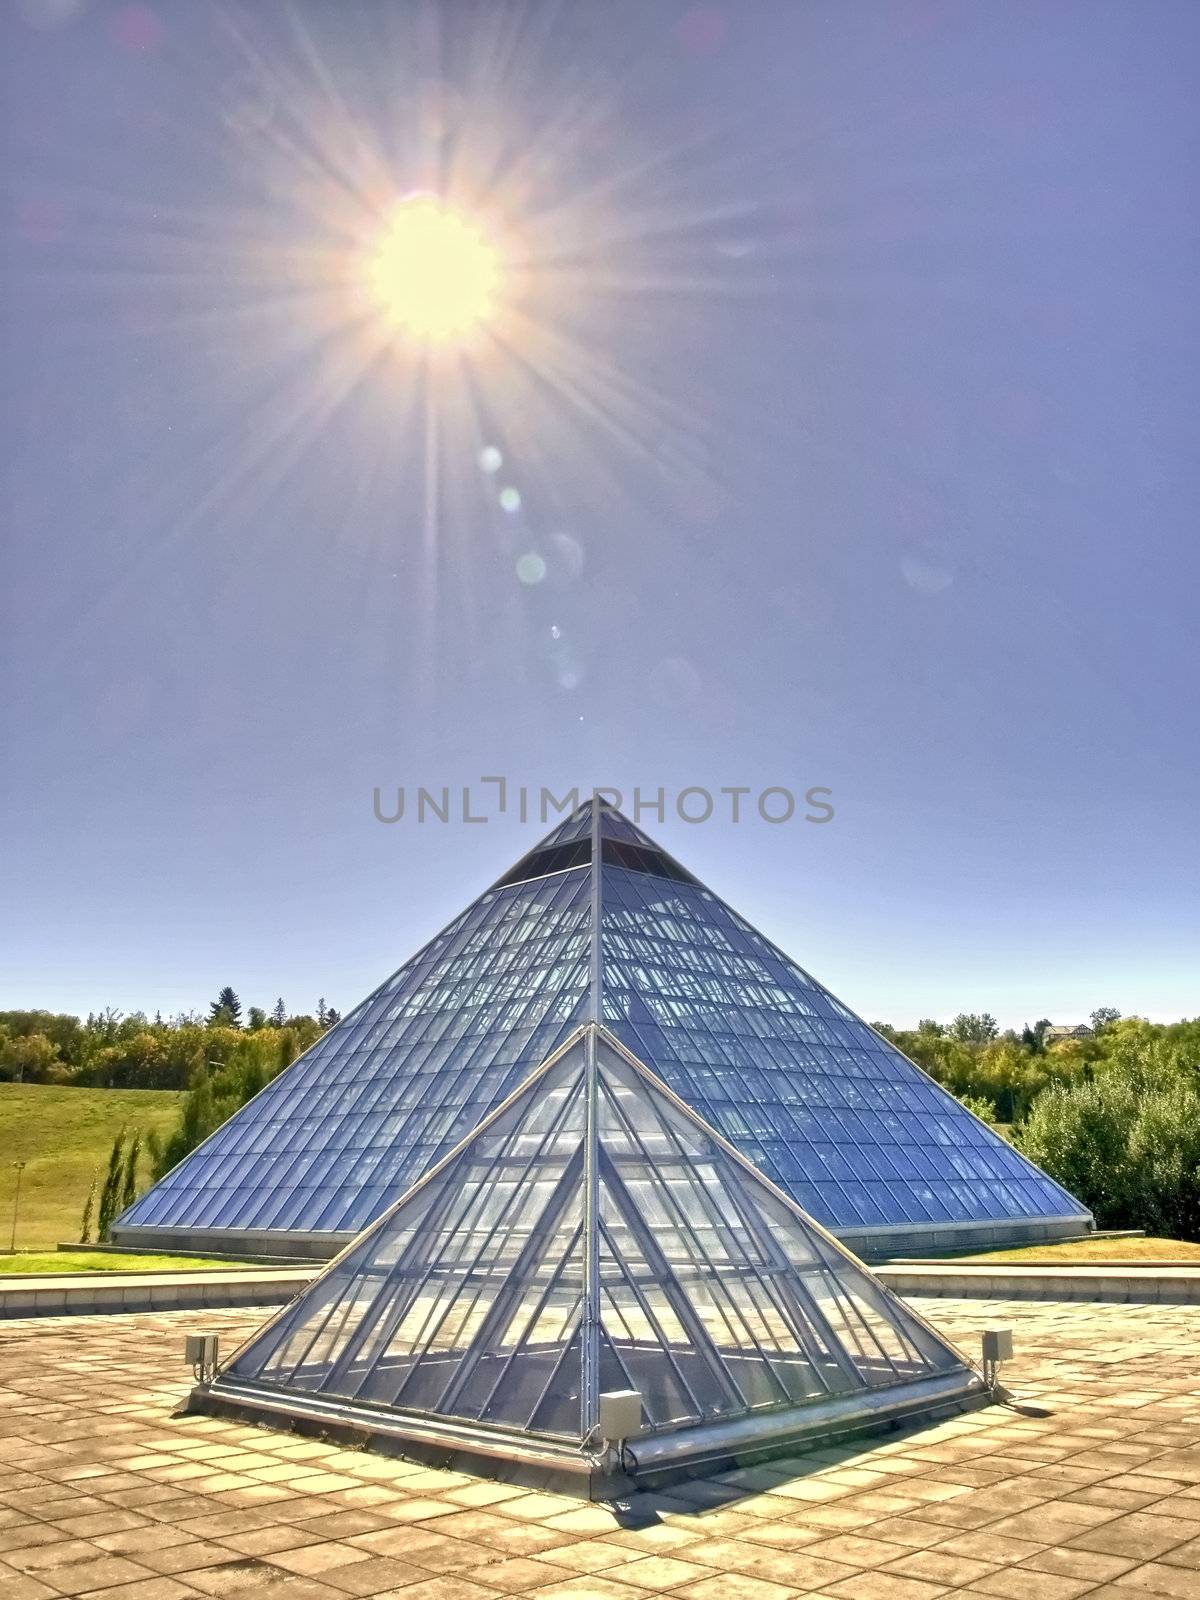 Pyramids of the Sun by watamyr